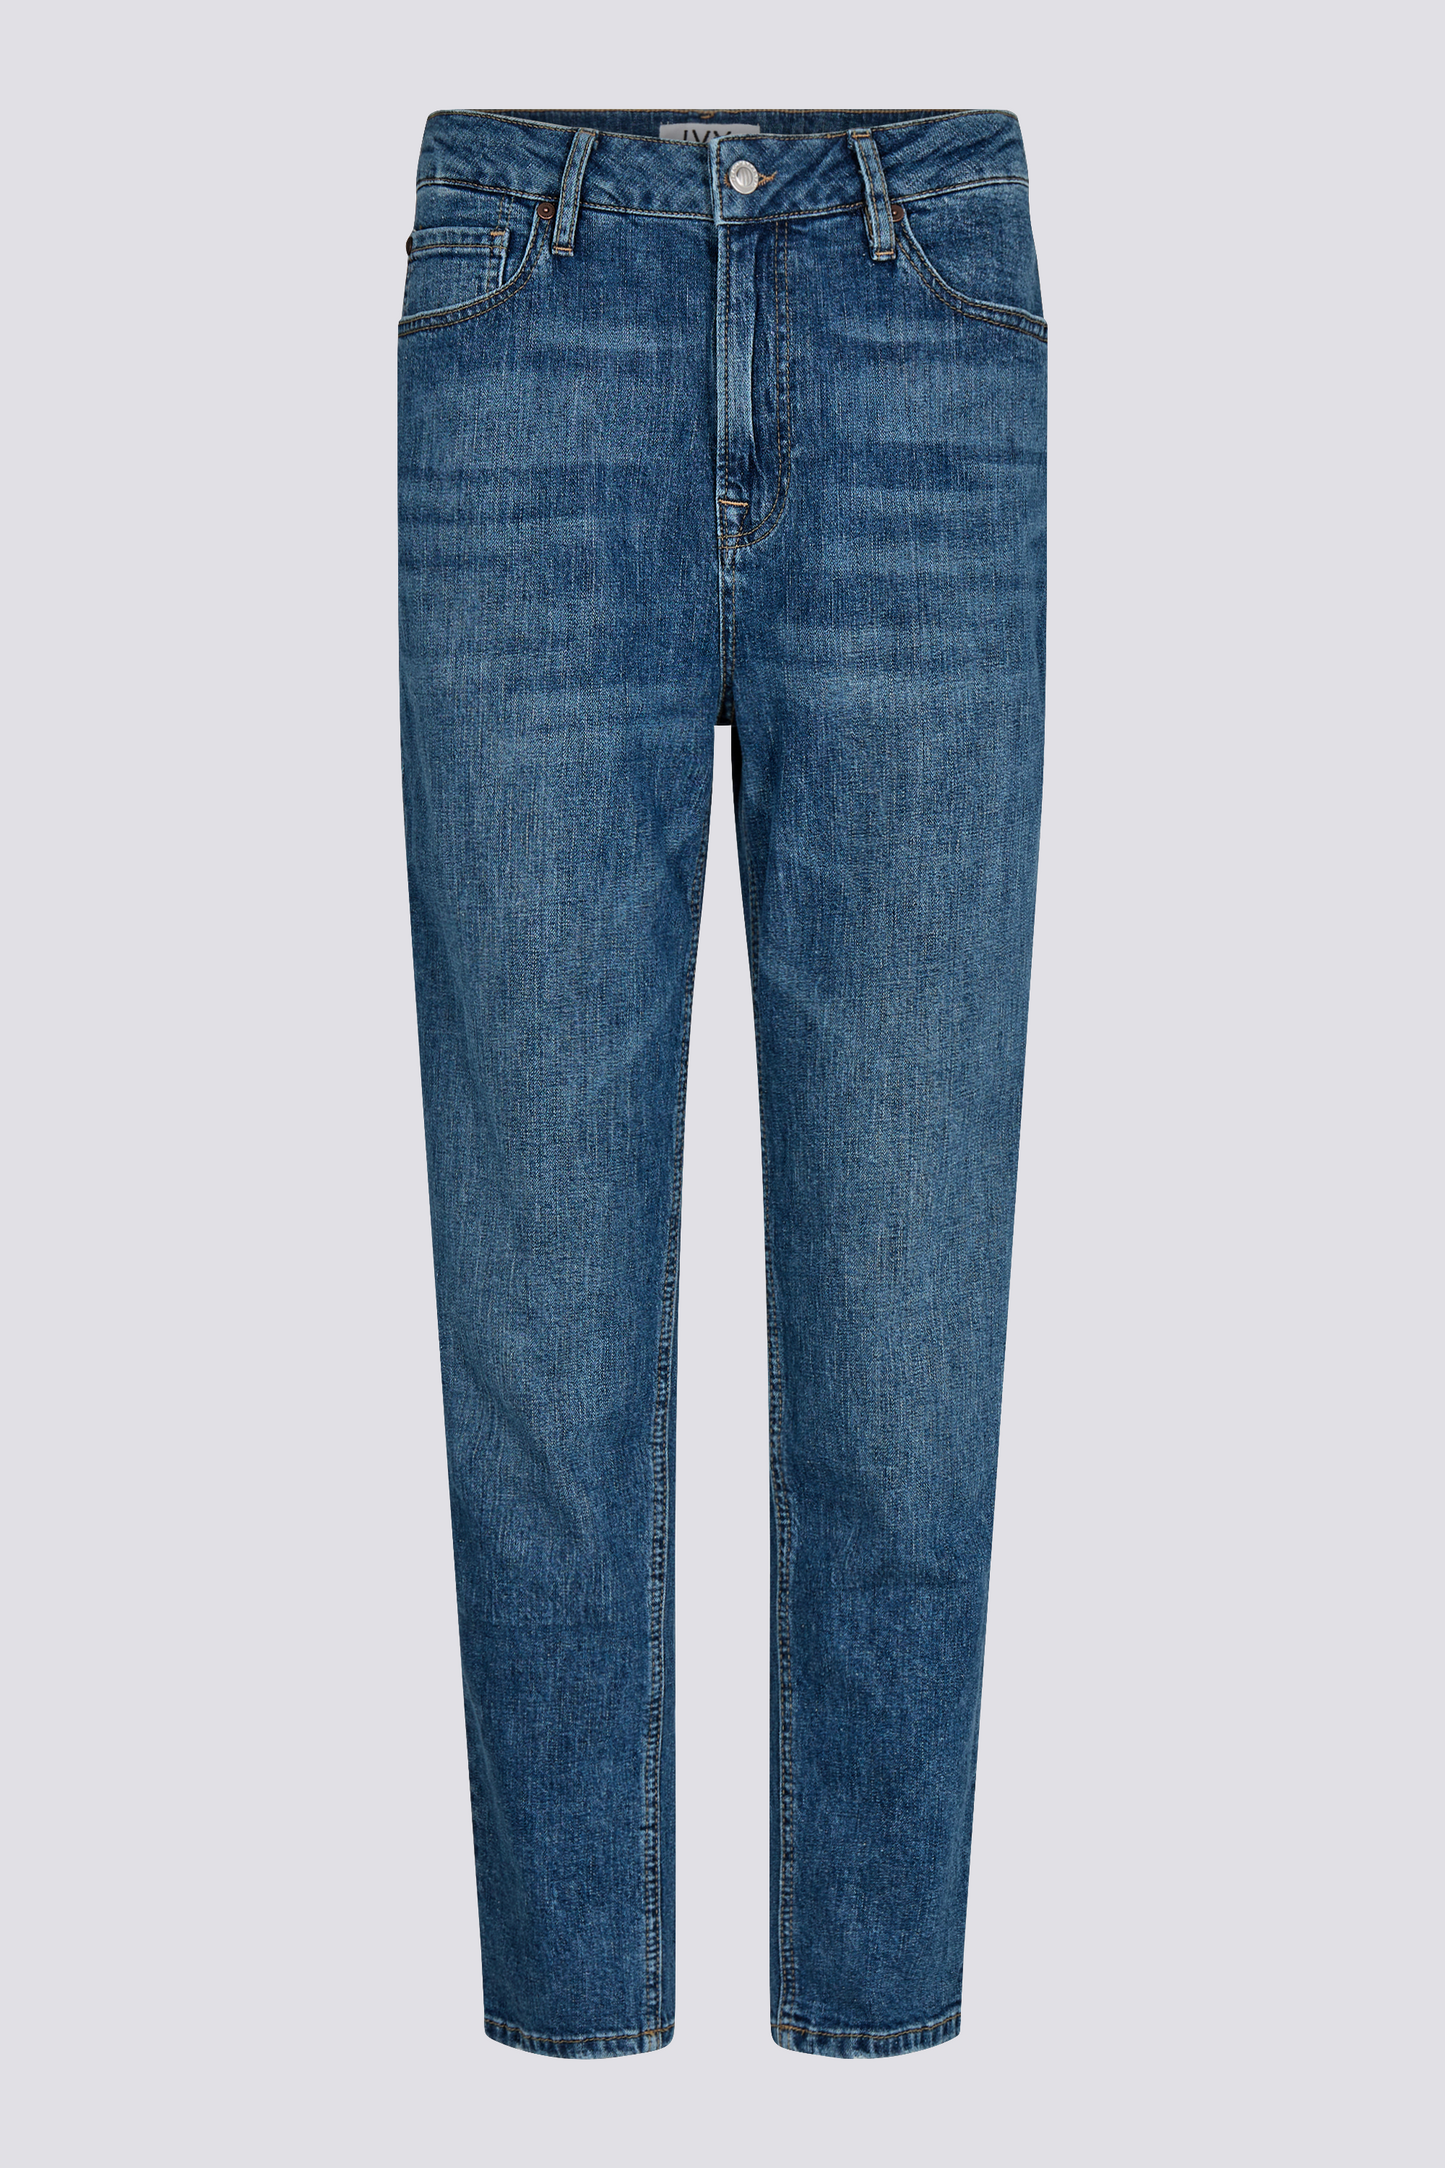 IVY Copenhagen IVY-Angie Jeans Wash Liverpool Street Jeans & Pants 51 Denim Blue